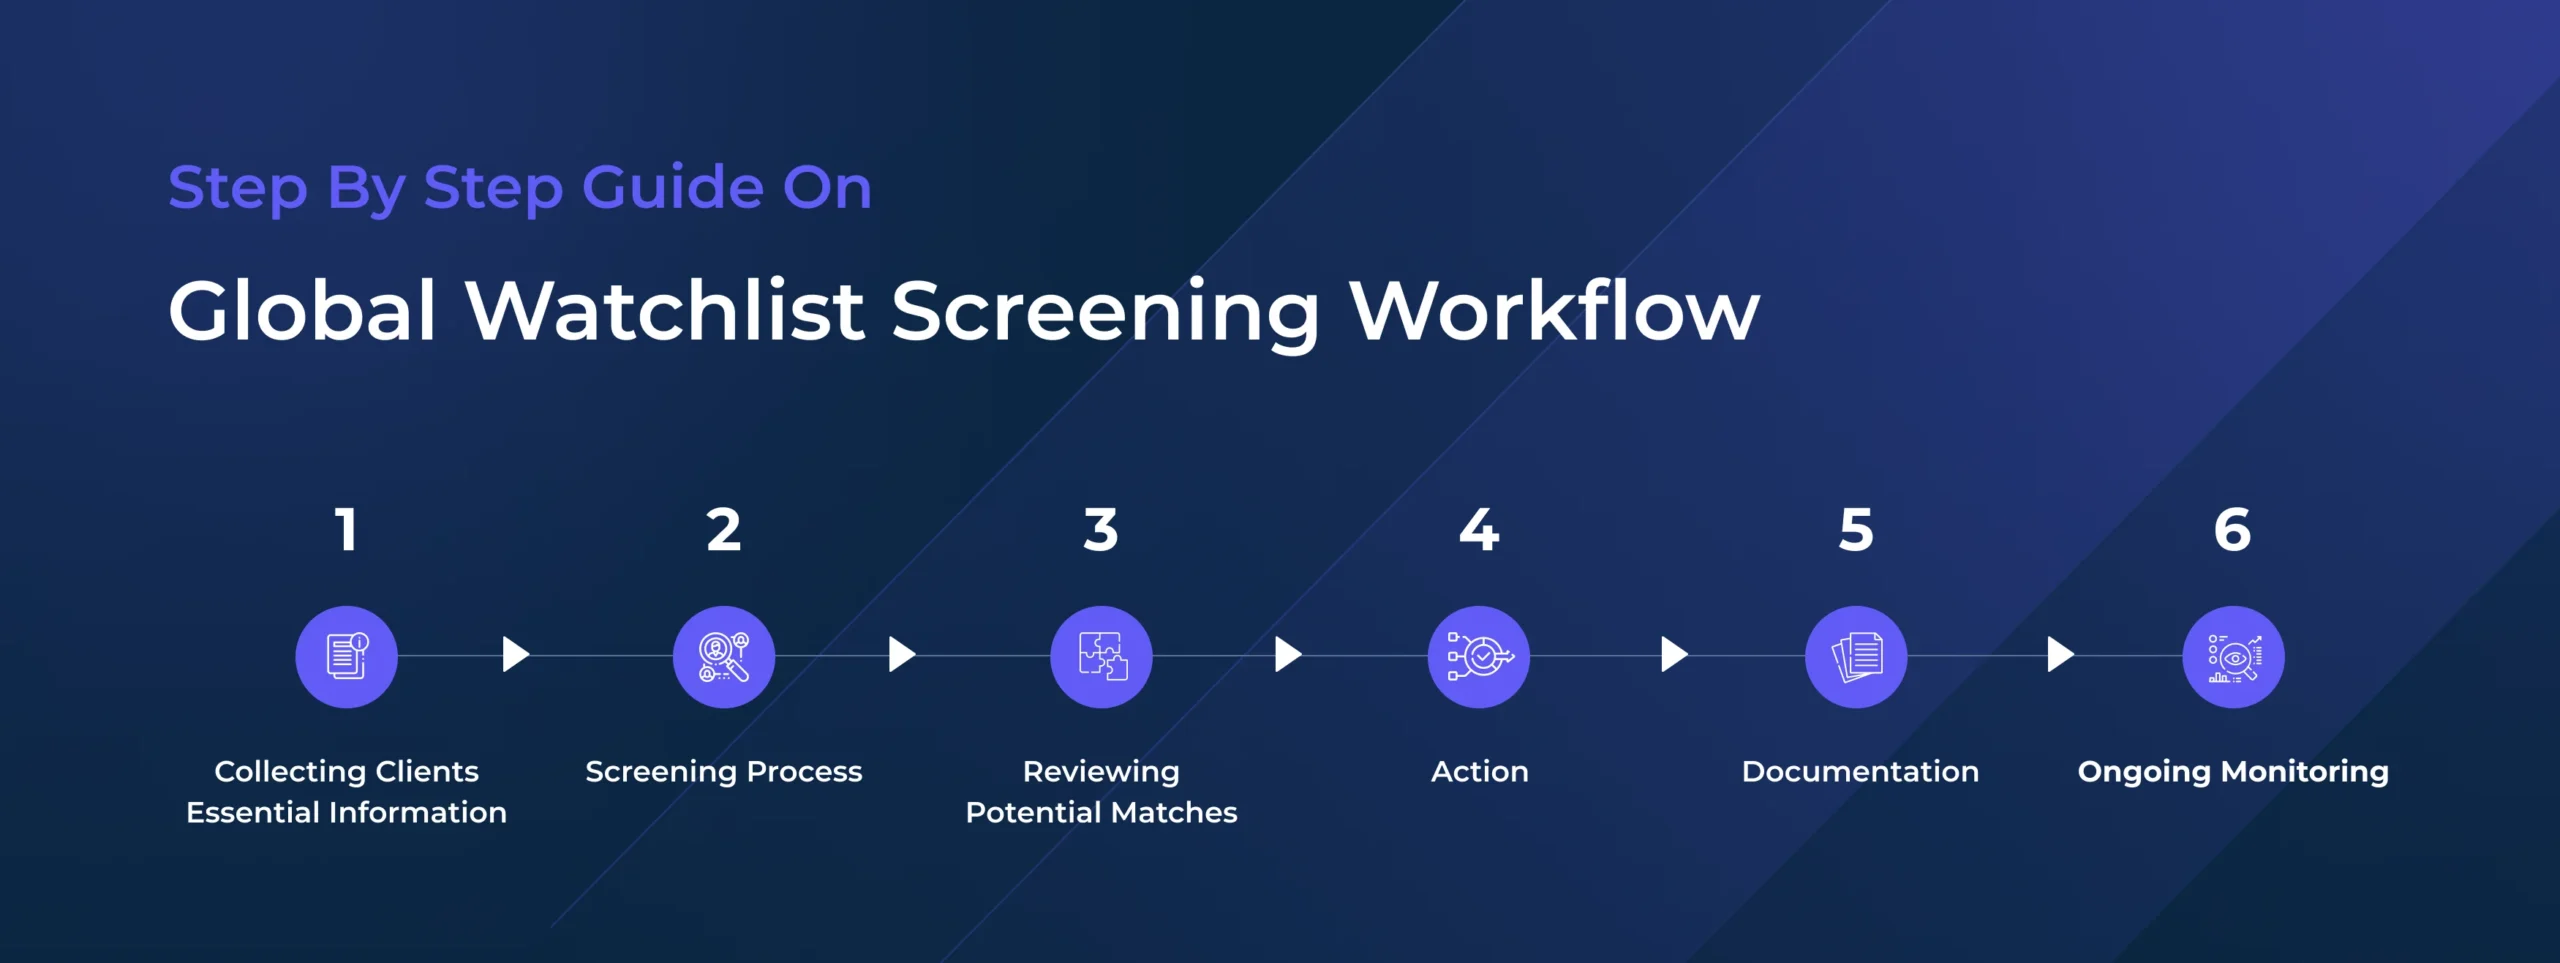 A six step process depicting global watchlist screening workflow 